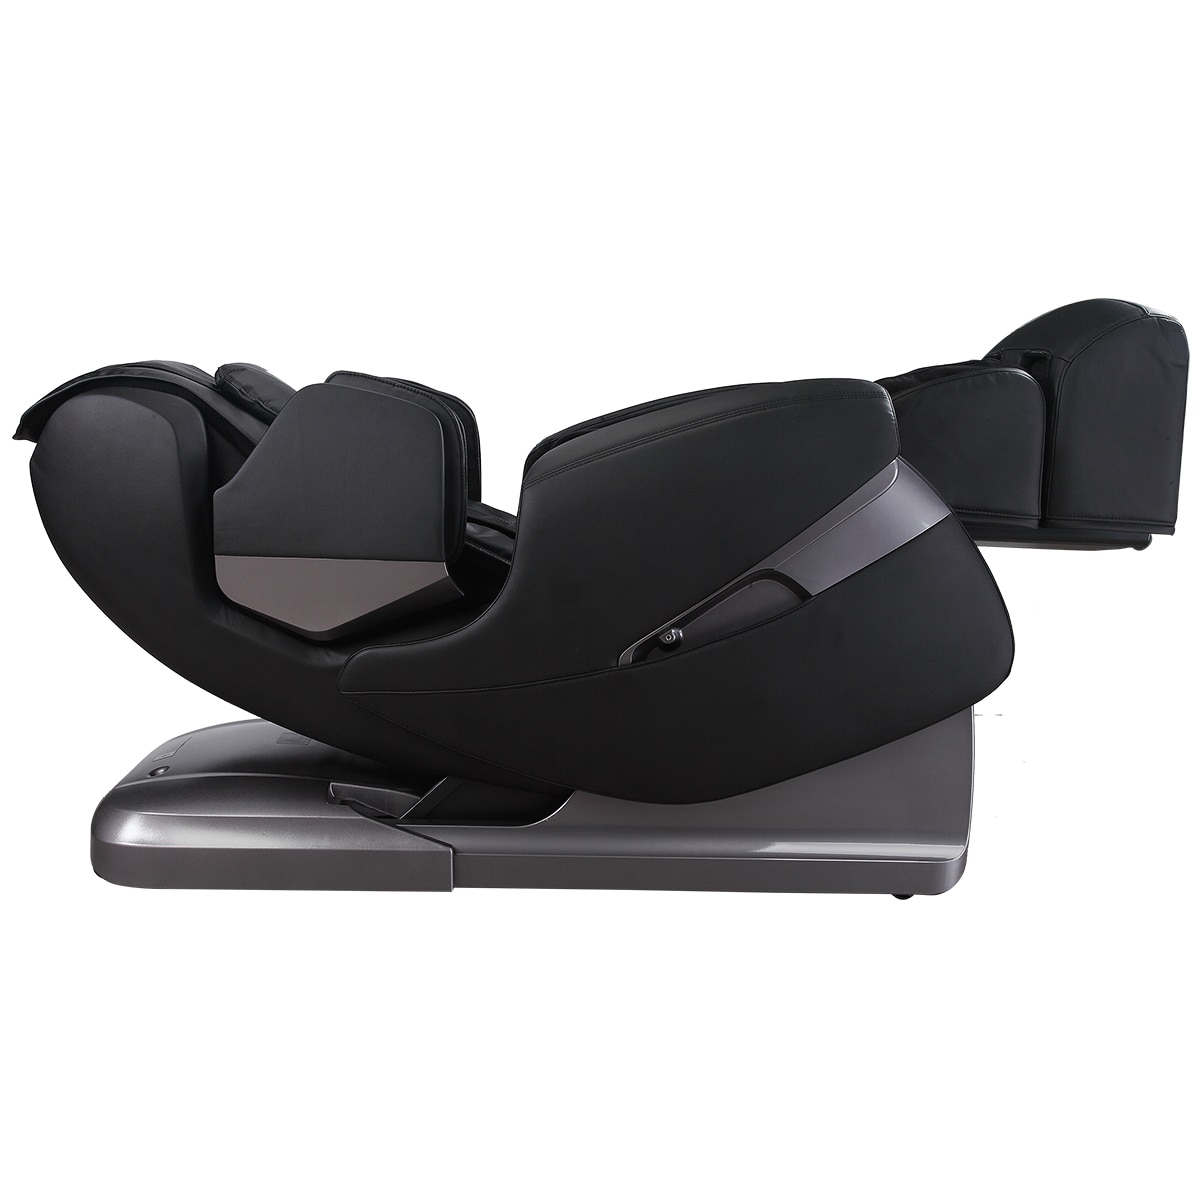 Masseuse Massage Chairs Platinum Health Massage Chair Black Costco Australia